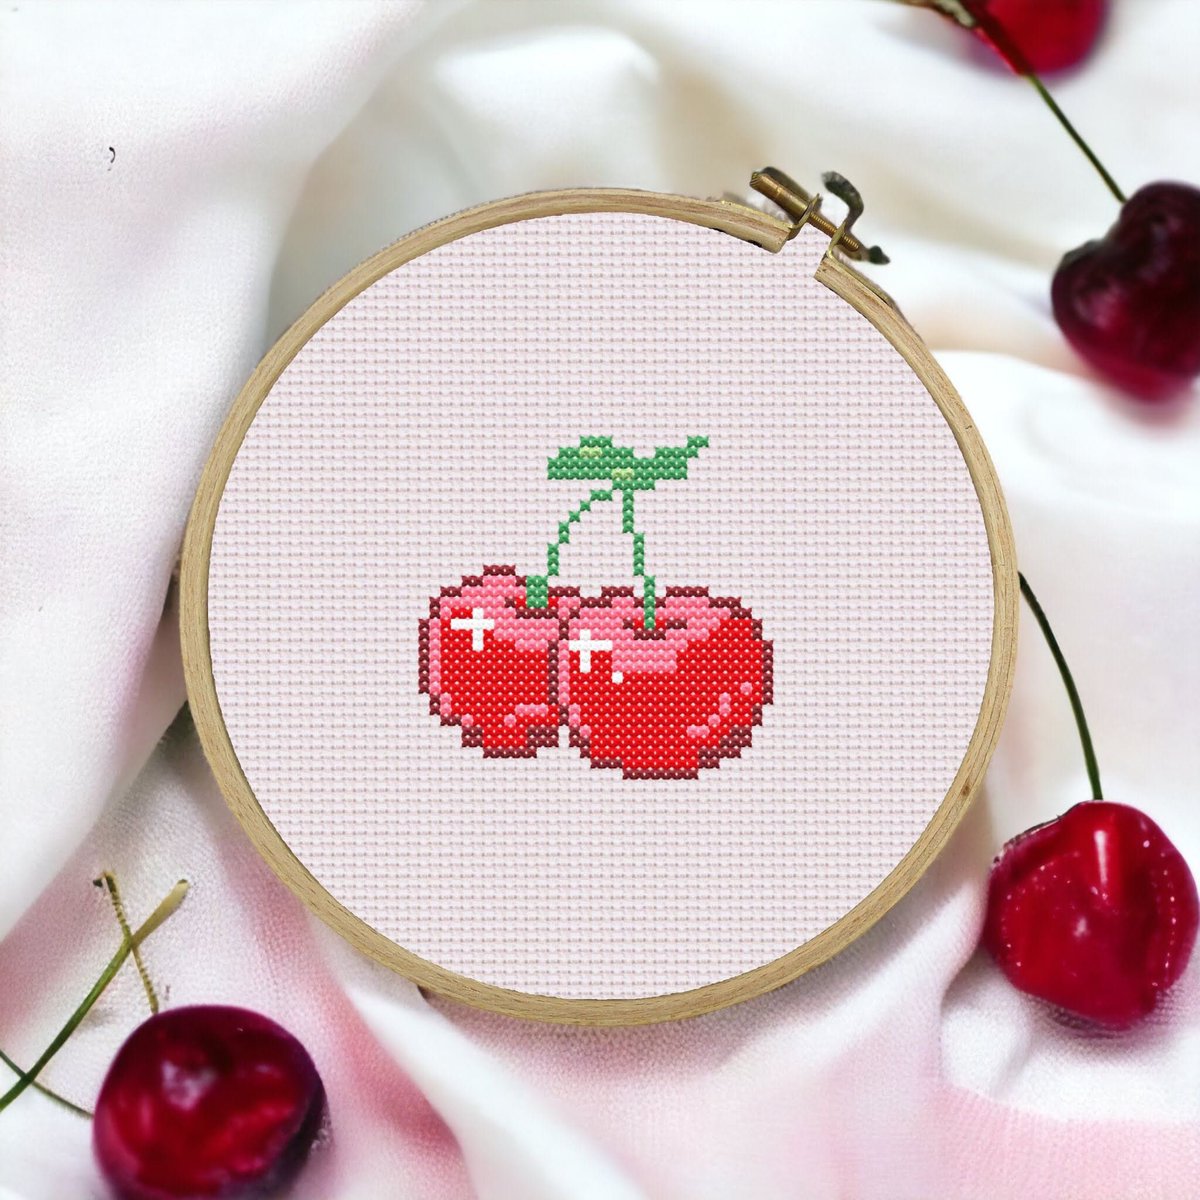 my #etsy shop: Cherry Pixel Art Mini Cross Stitch Pattern PDF ONLY - Embroidery Pattern - 74 x 74 Stitch, Cute Pattern, Simple Fruit Pattern, Beginner, DIY etsy.me/3oA5nev #birthday #valentinesday #crossstitch #crossstitchpattern #pdfpattern #embroiderypattern